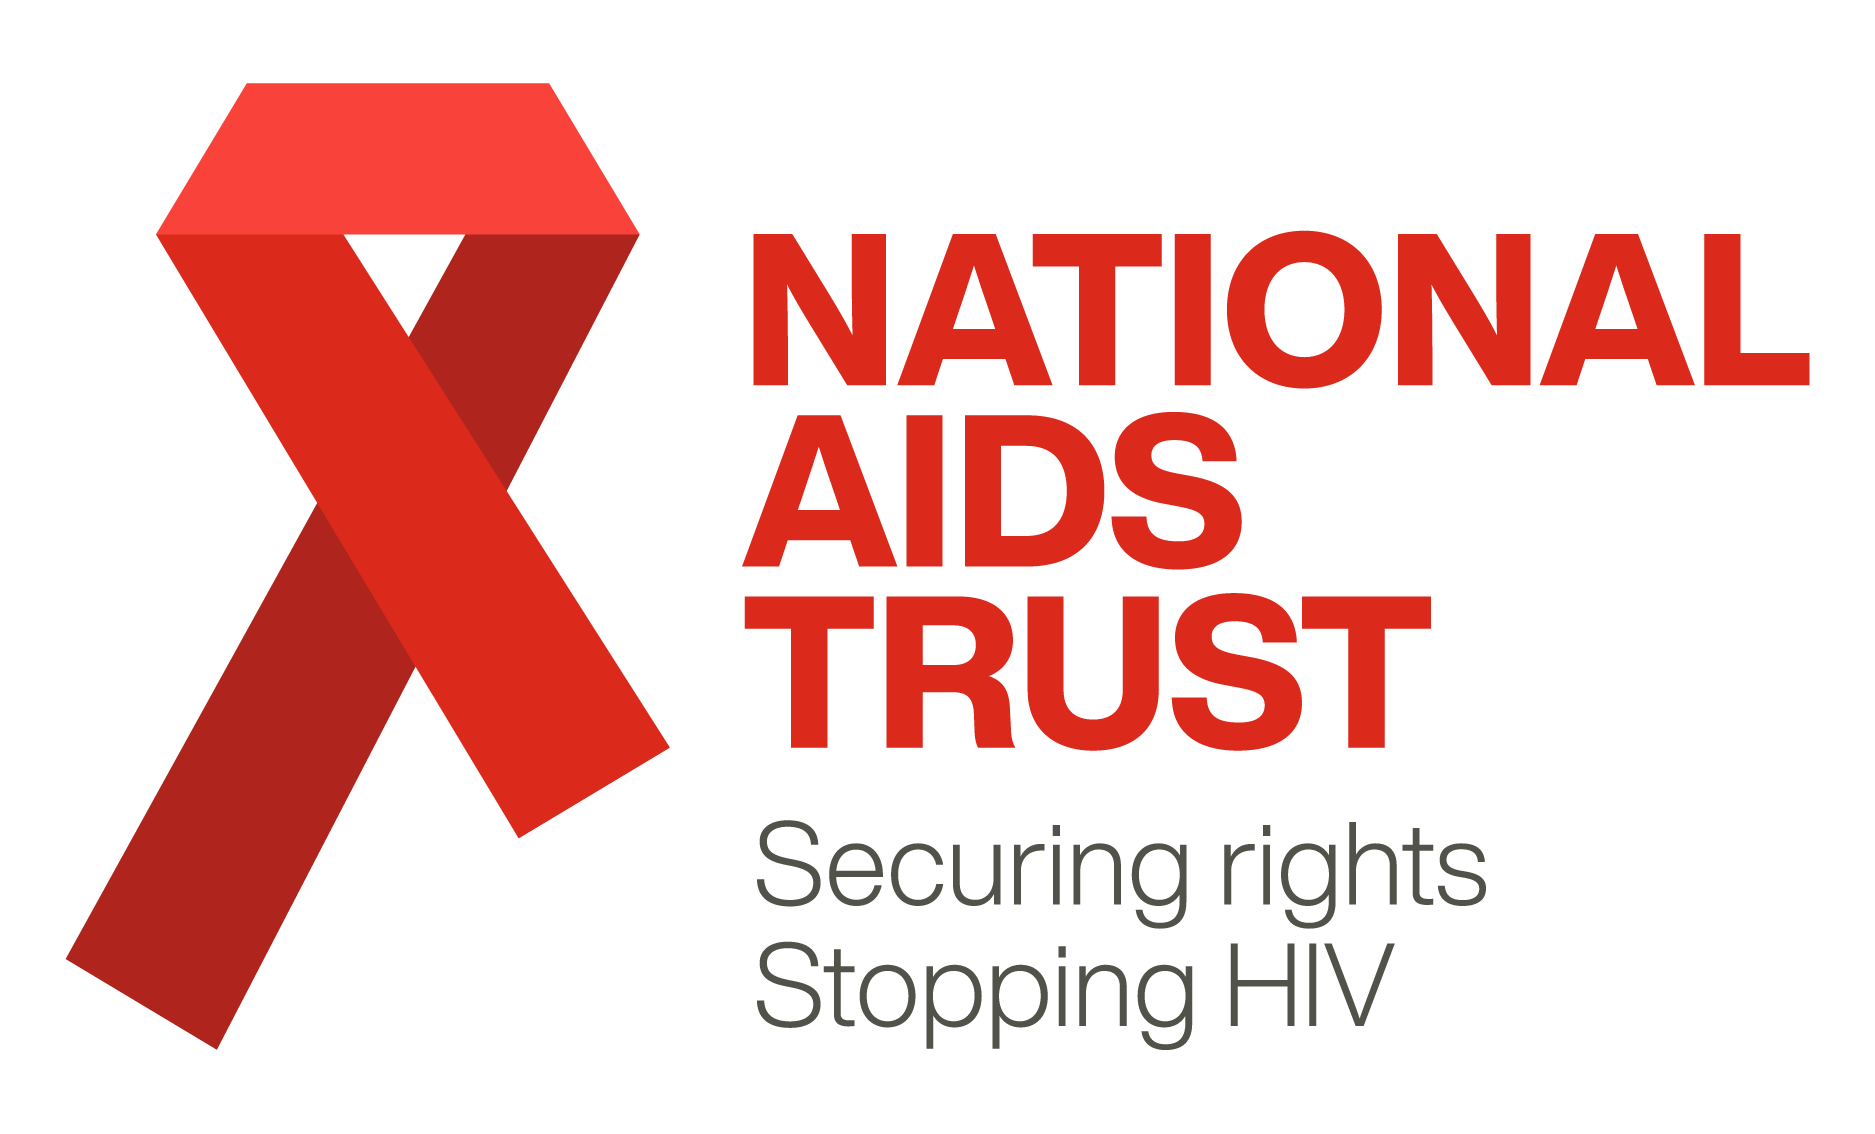 National AIDS Trust logo